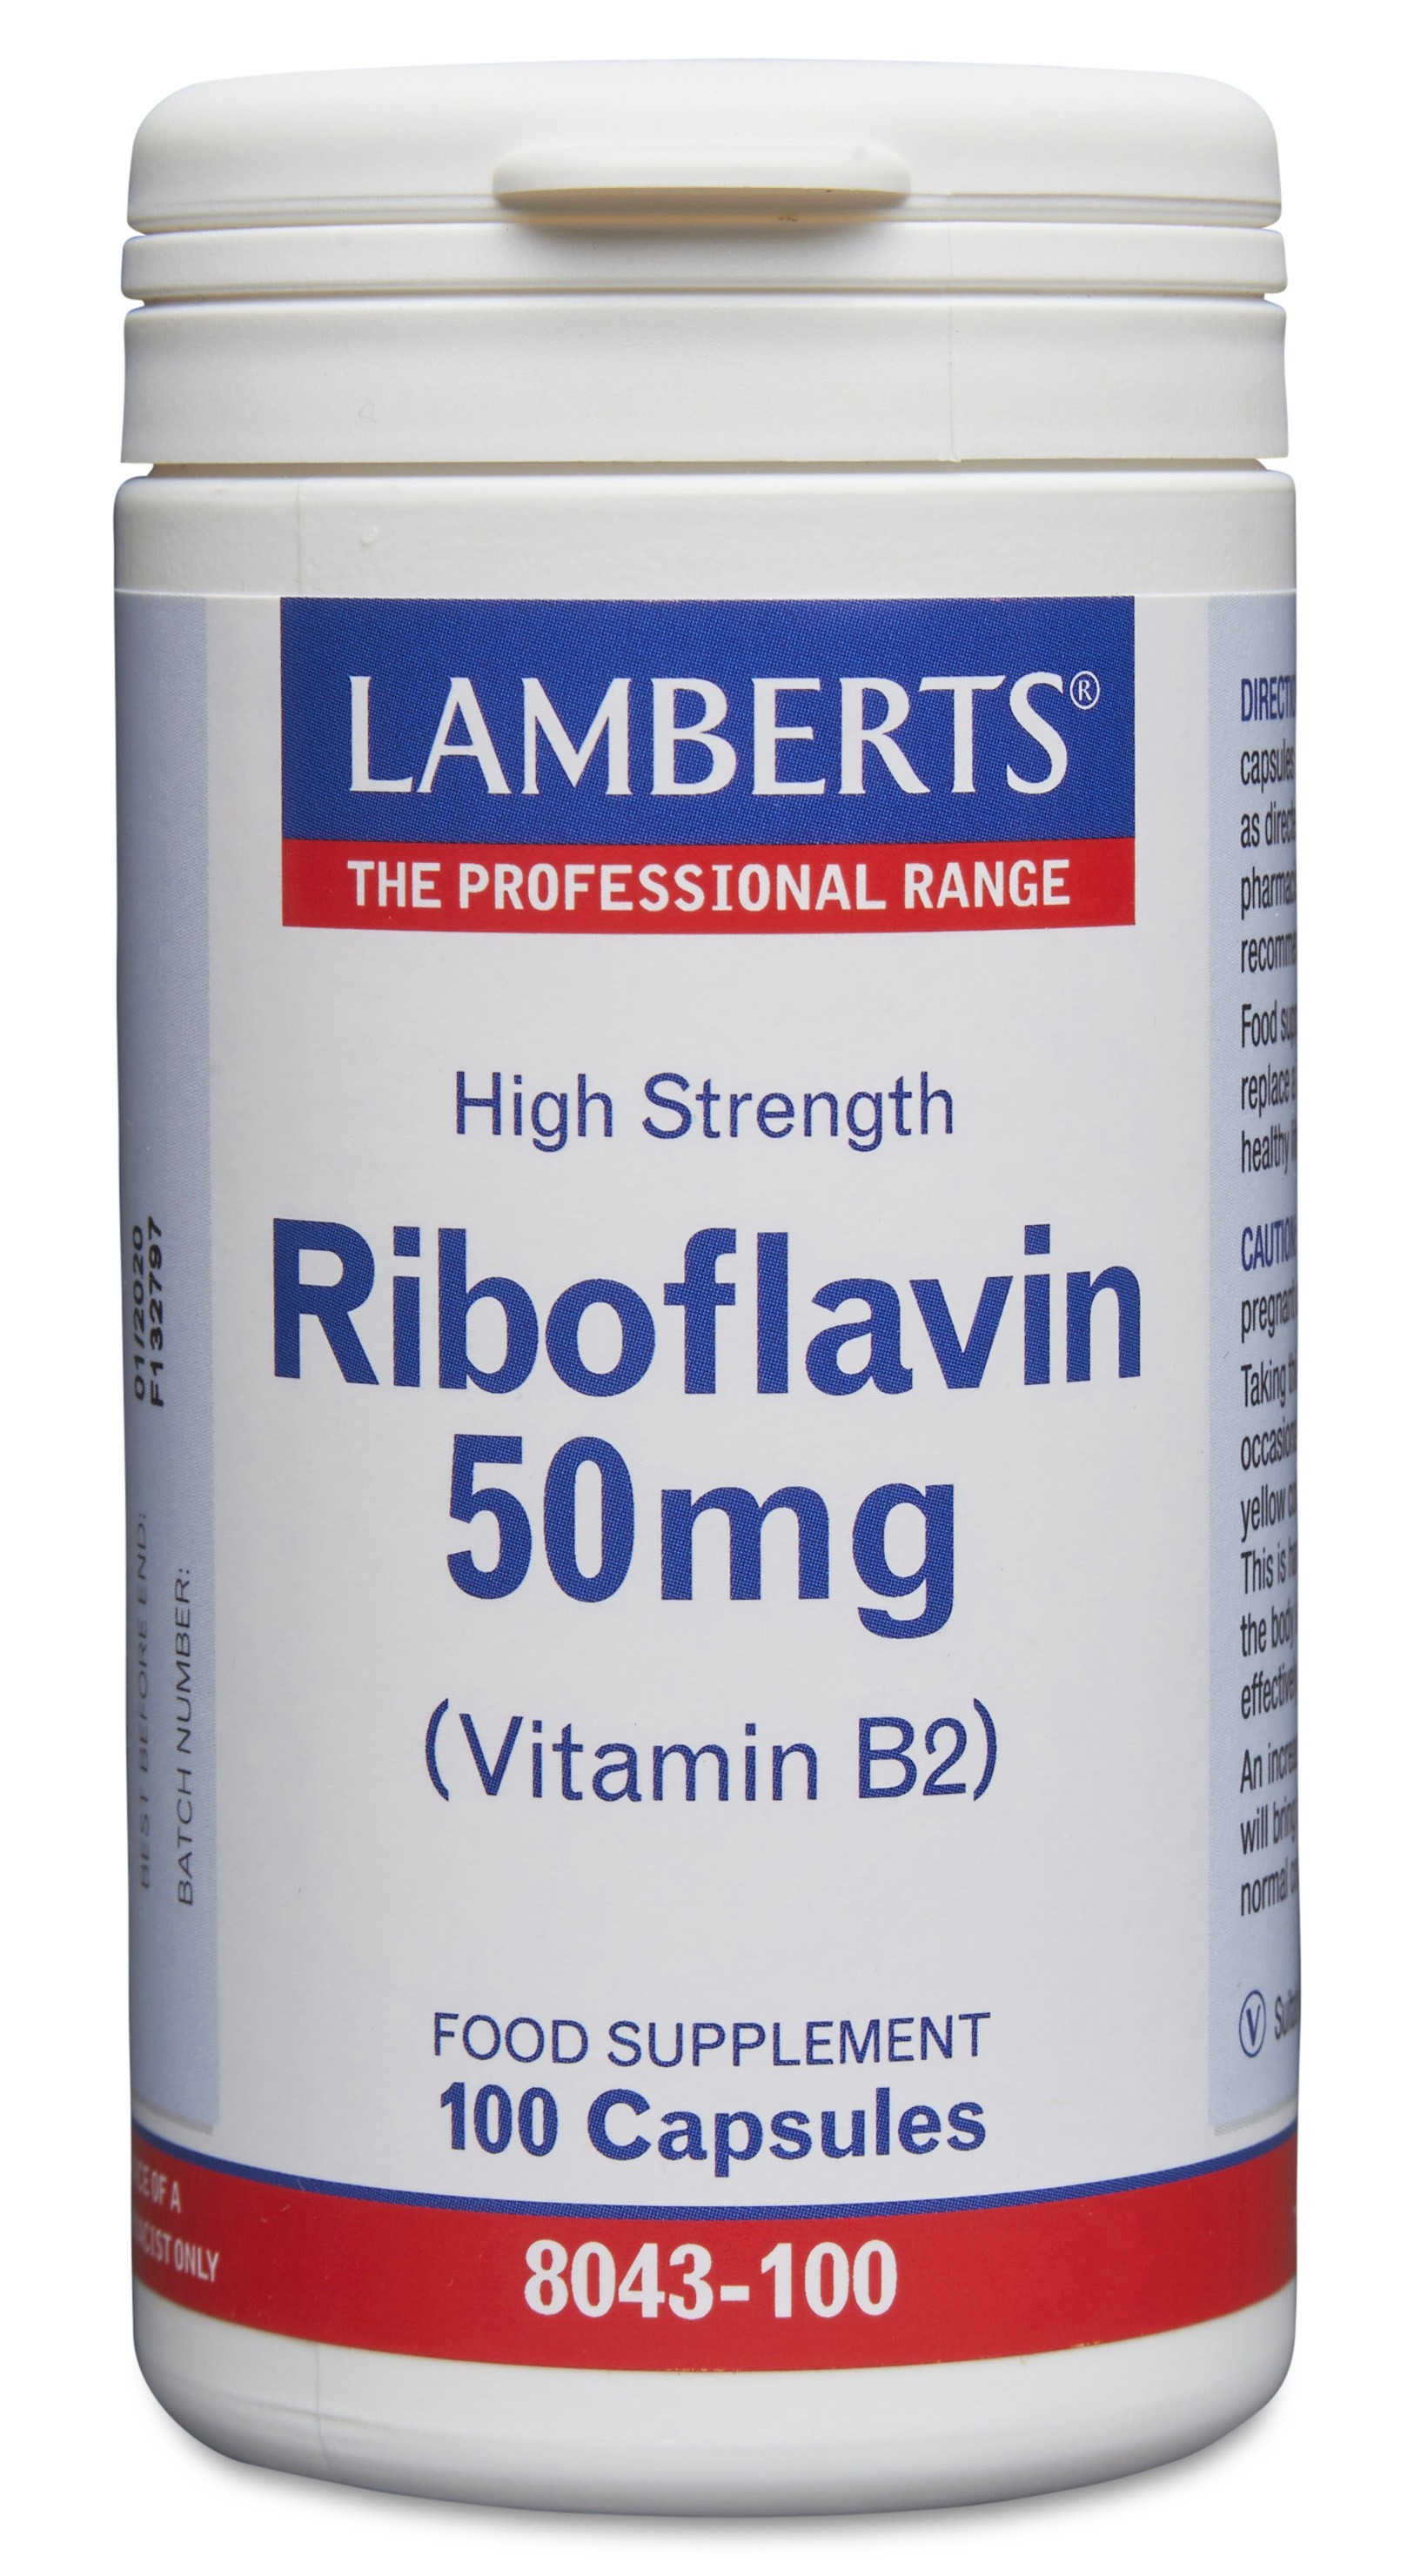 Lamberts Riboflavin 50mg (Vitamin B2)